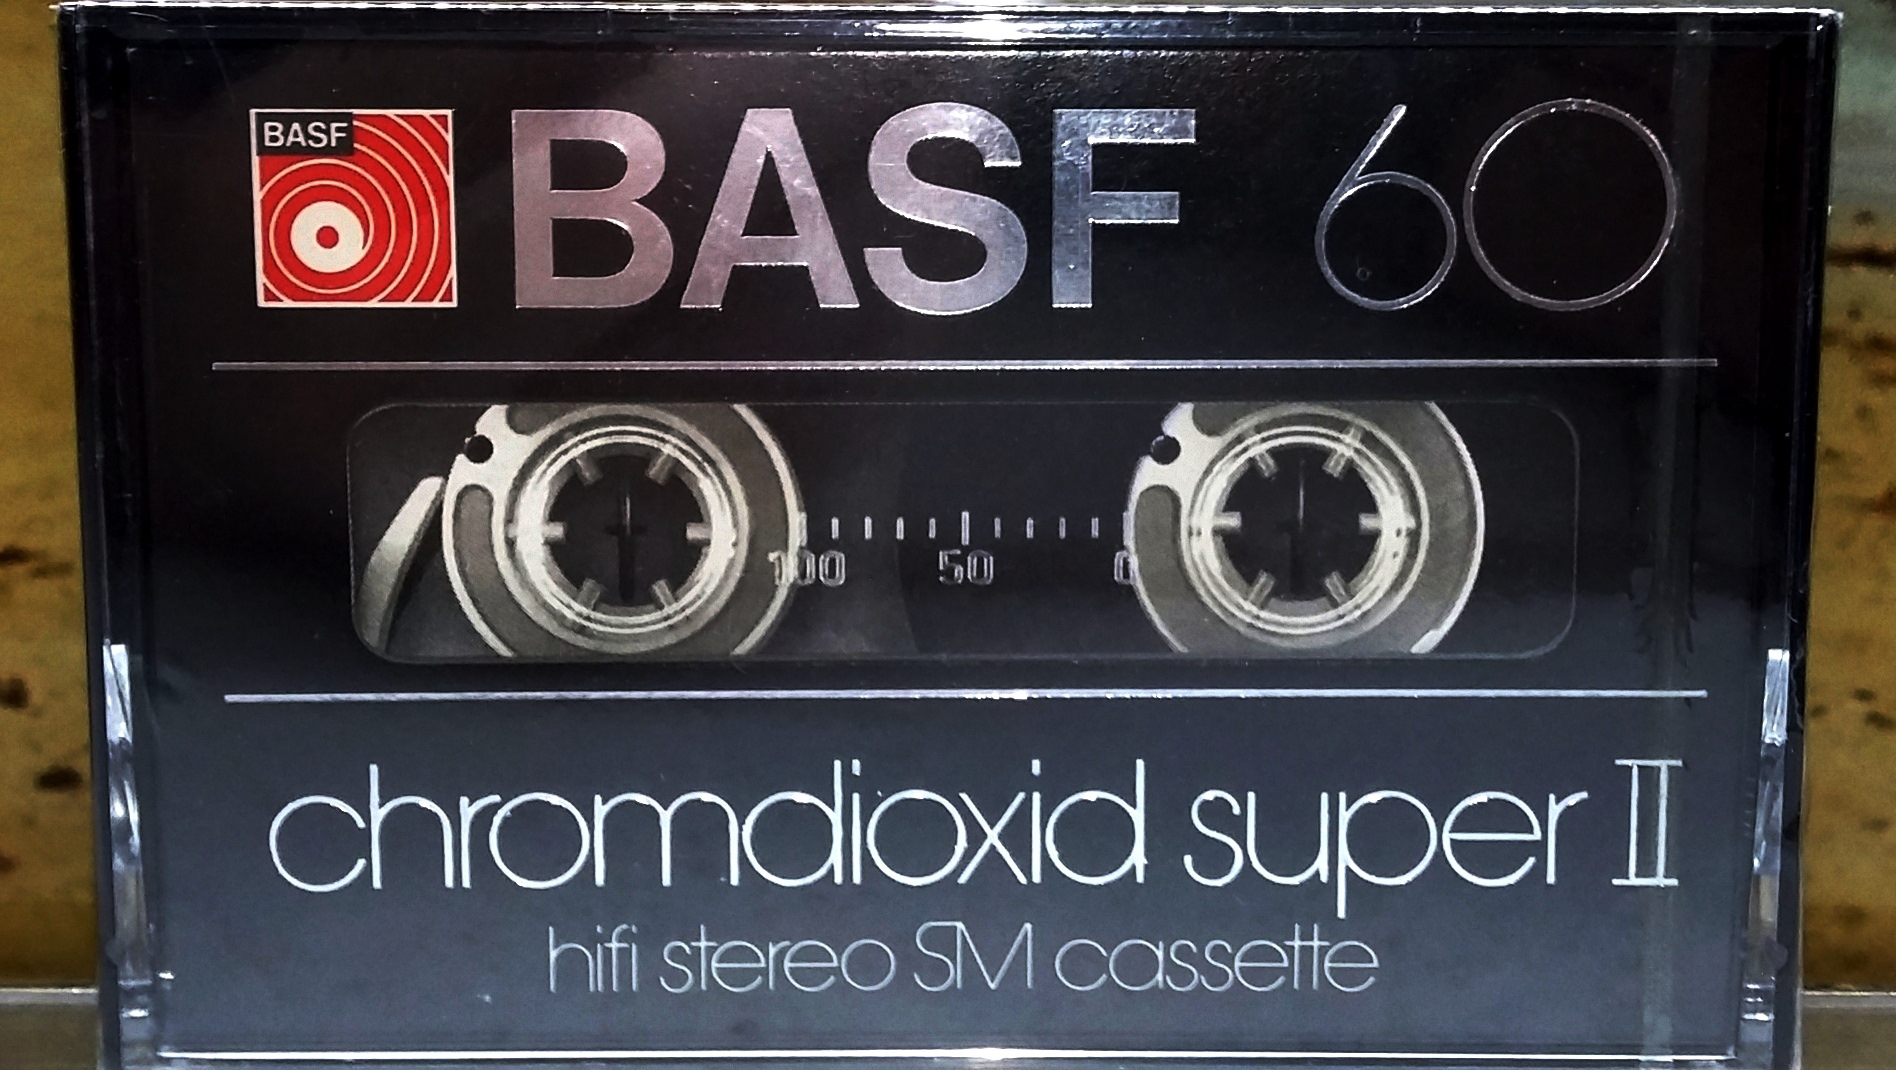 Super second. Аудиокассета BASF Chrome super 60. BASF Chromdioxid II 60. BASF Chromdioxid II 90. BASF HIFI Chromdioxid super II.